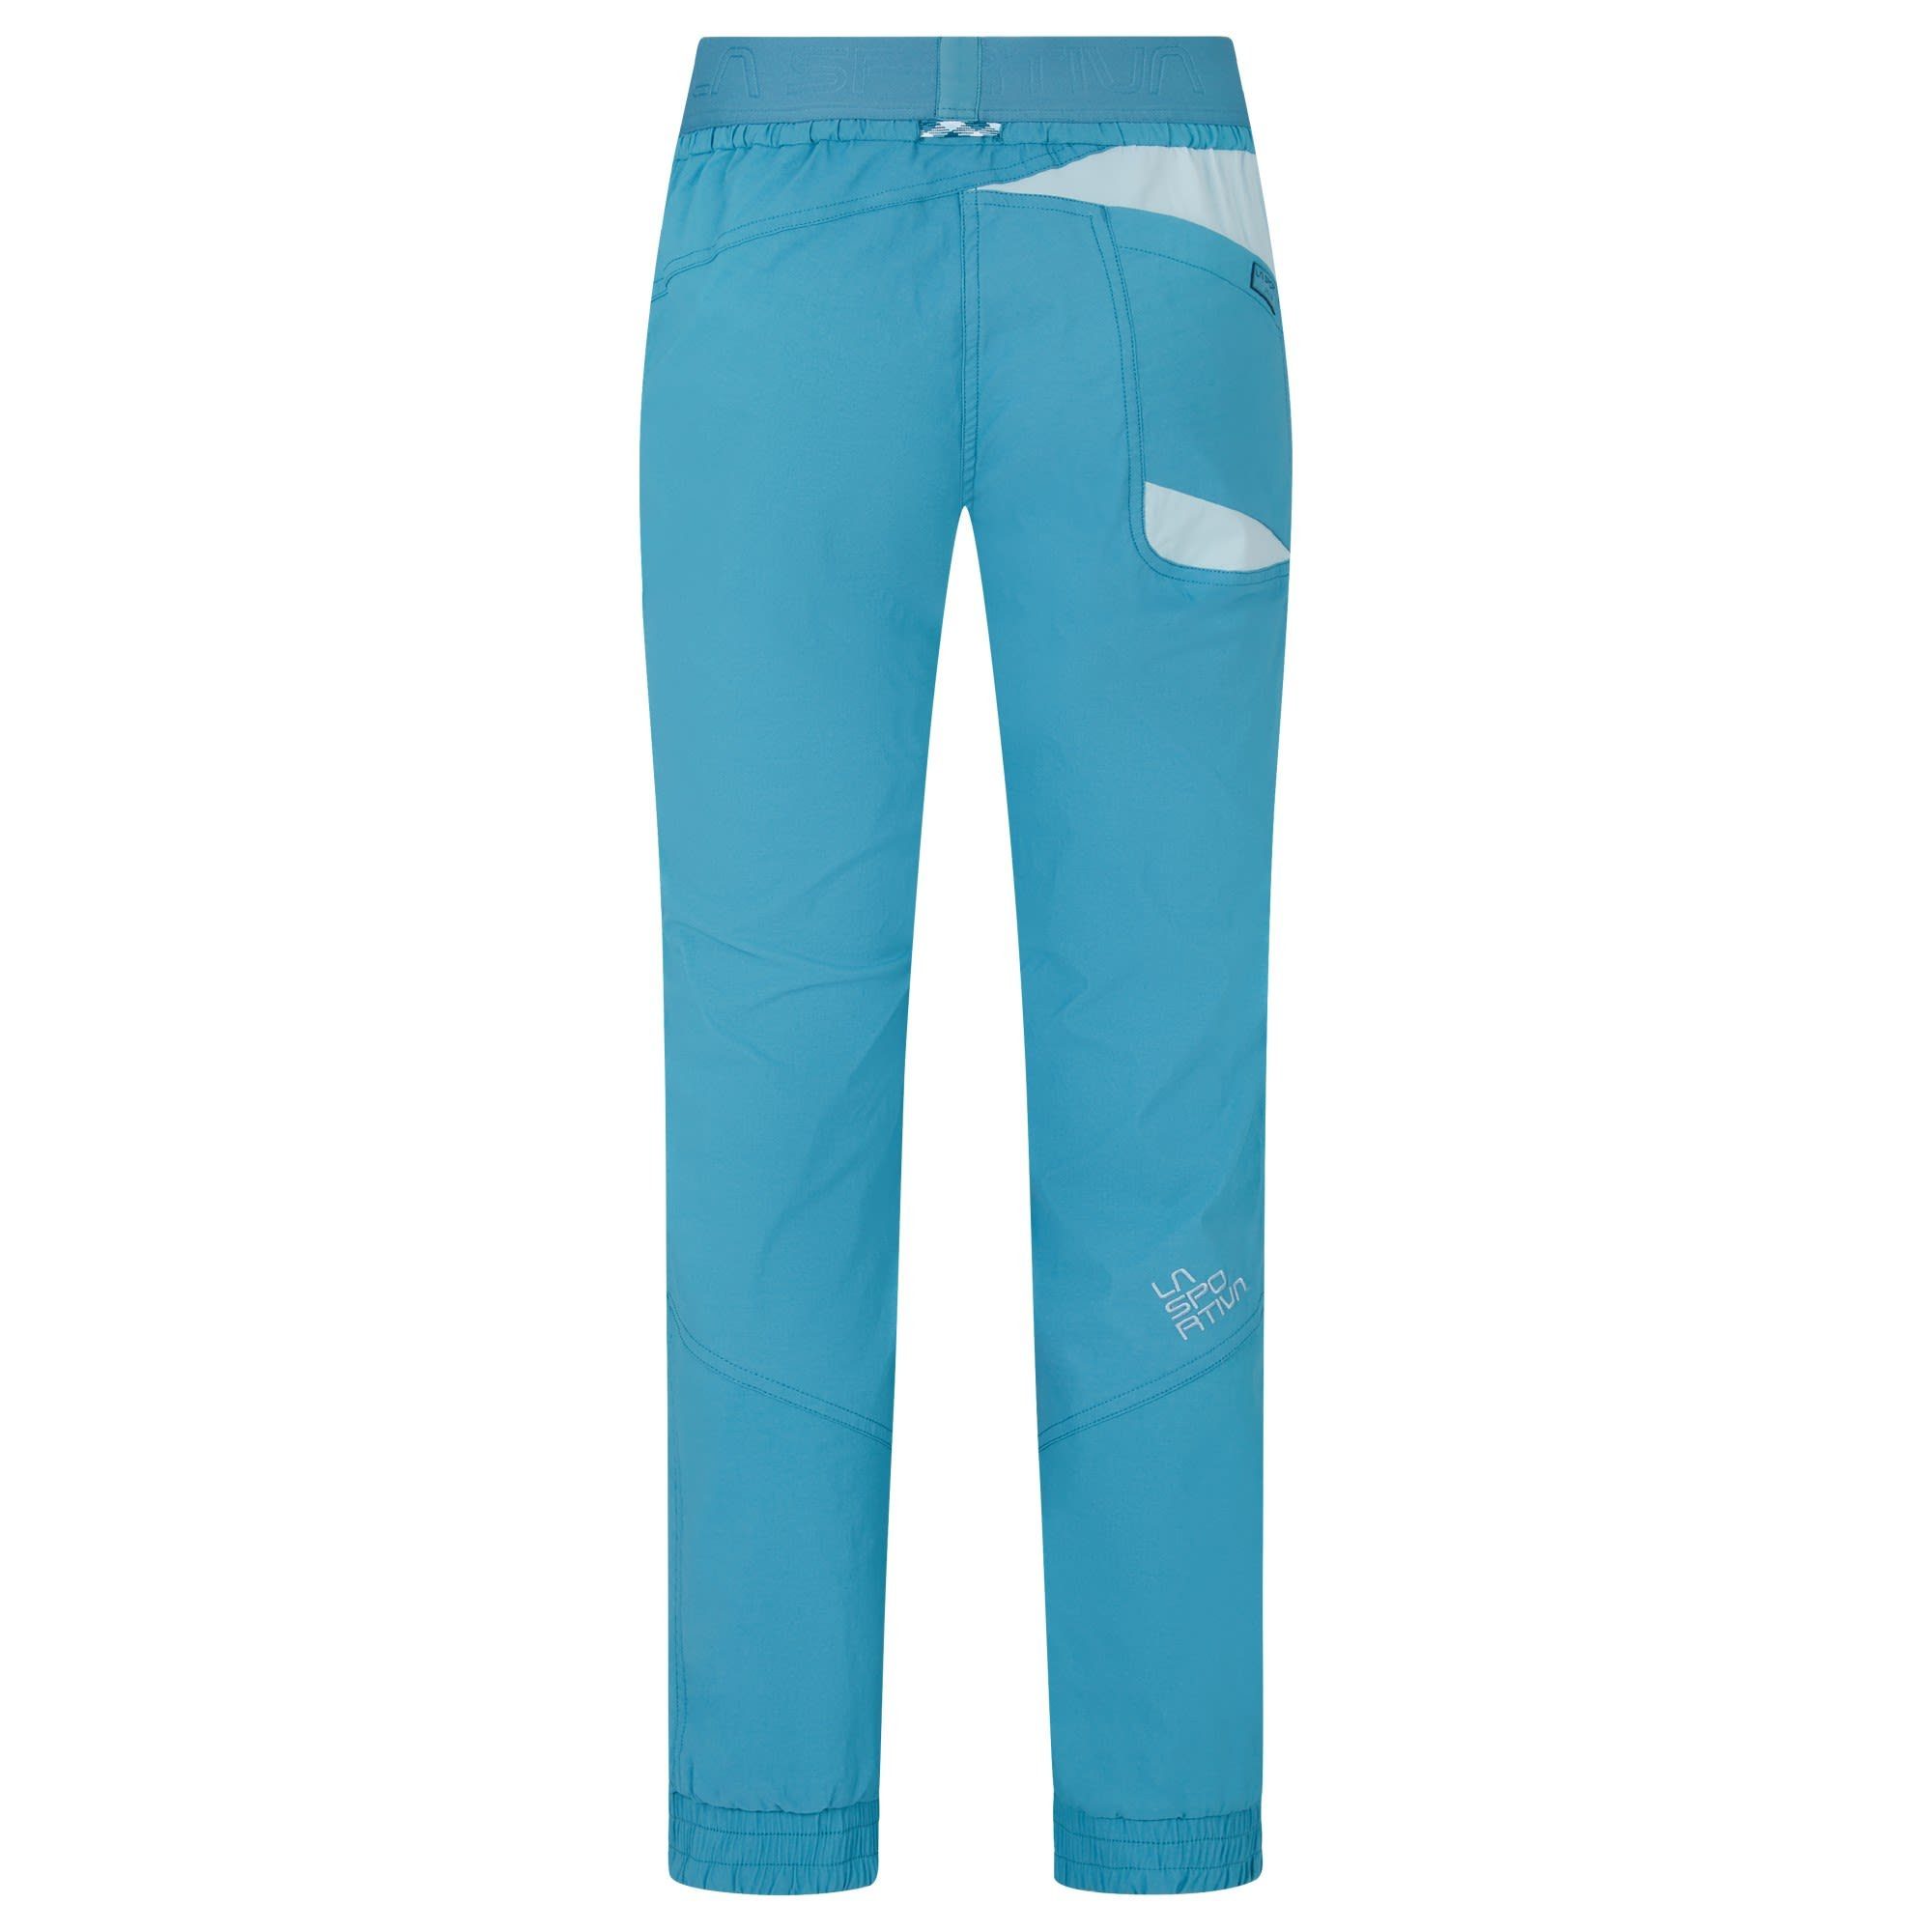 Hose Damen blau W La La Sportiva Pant & Sportiva Hose Shorts Mantra